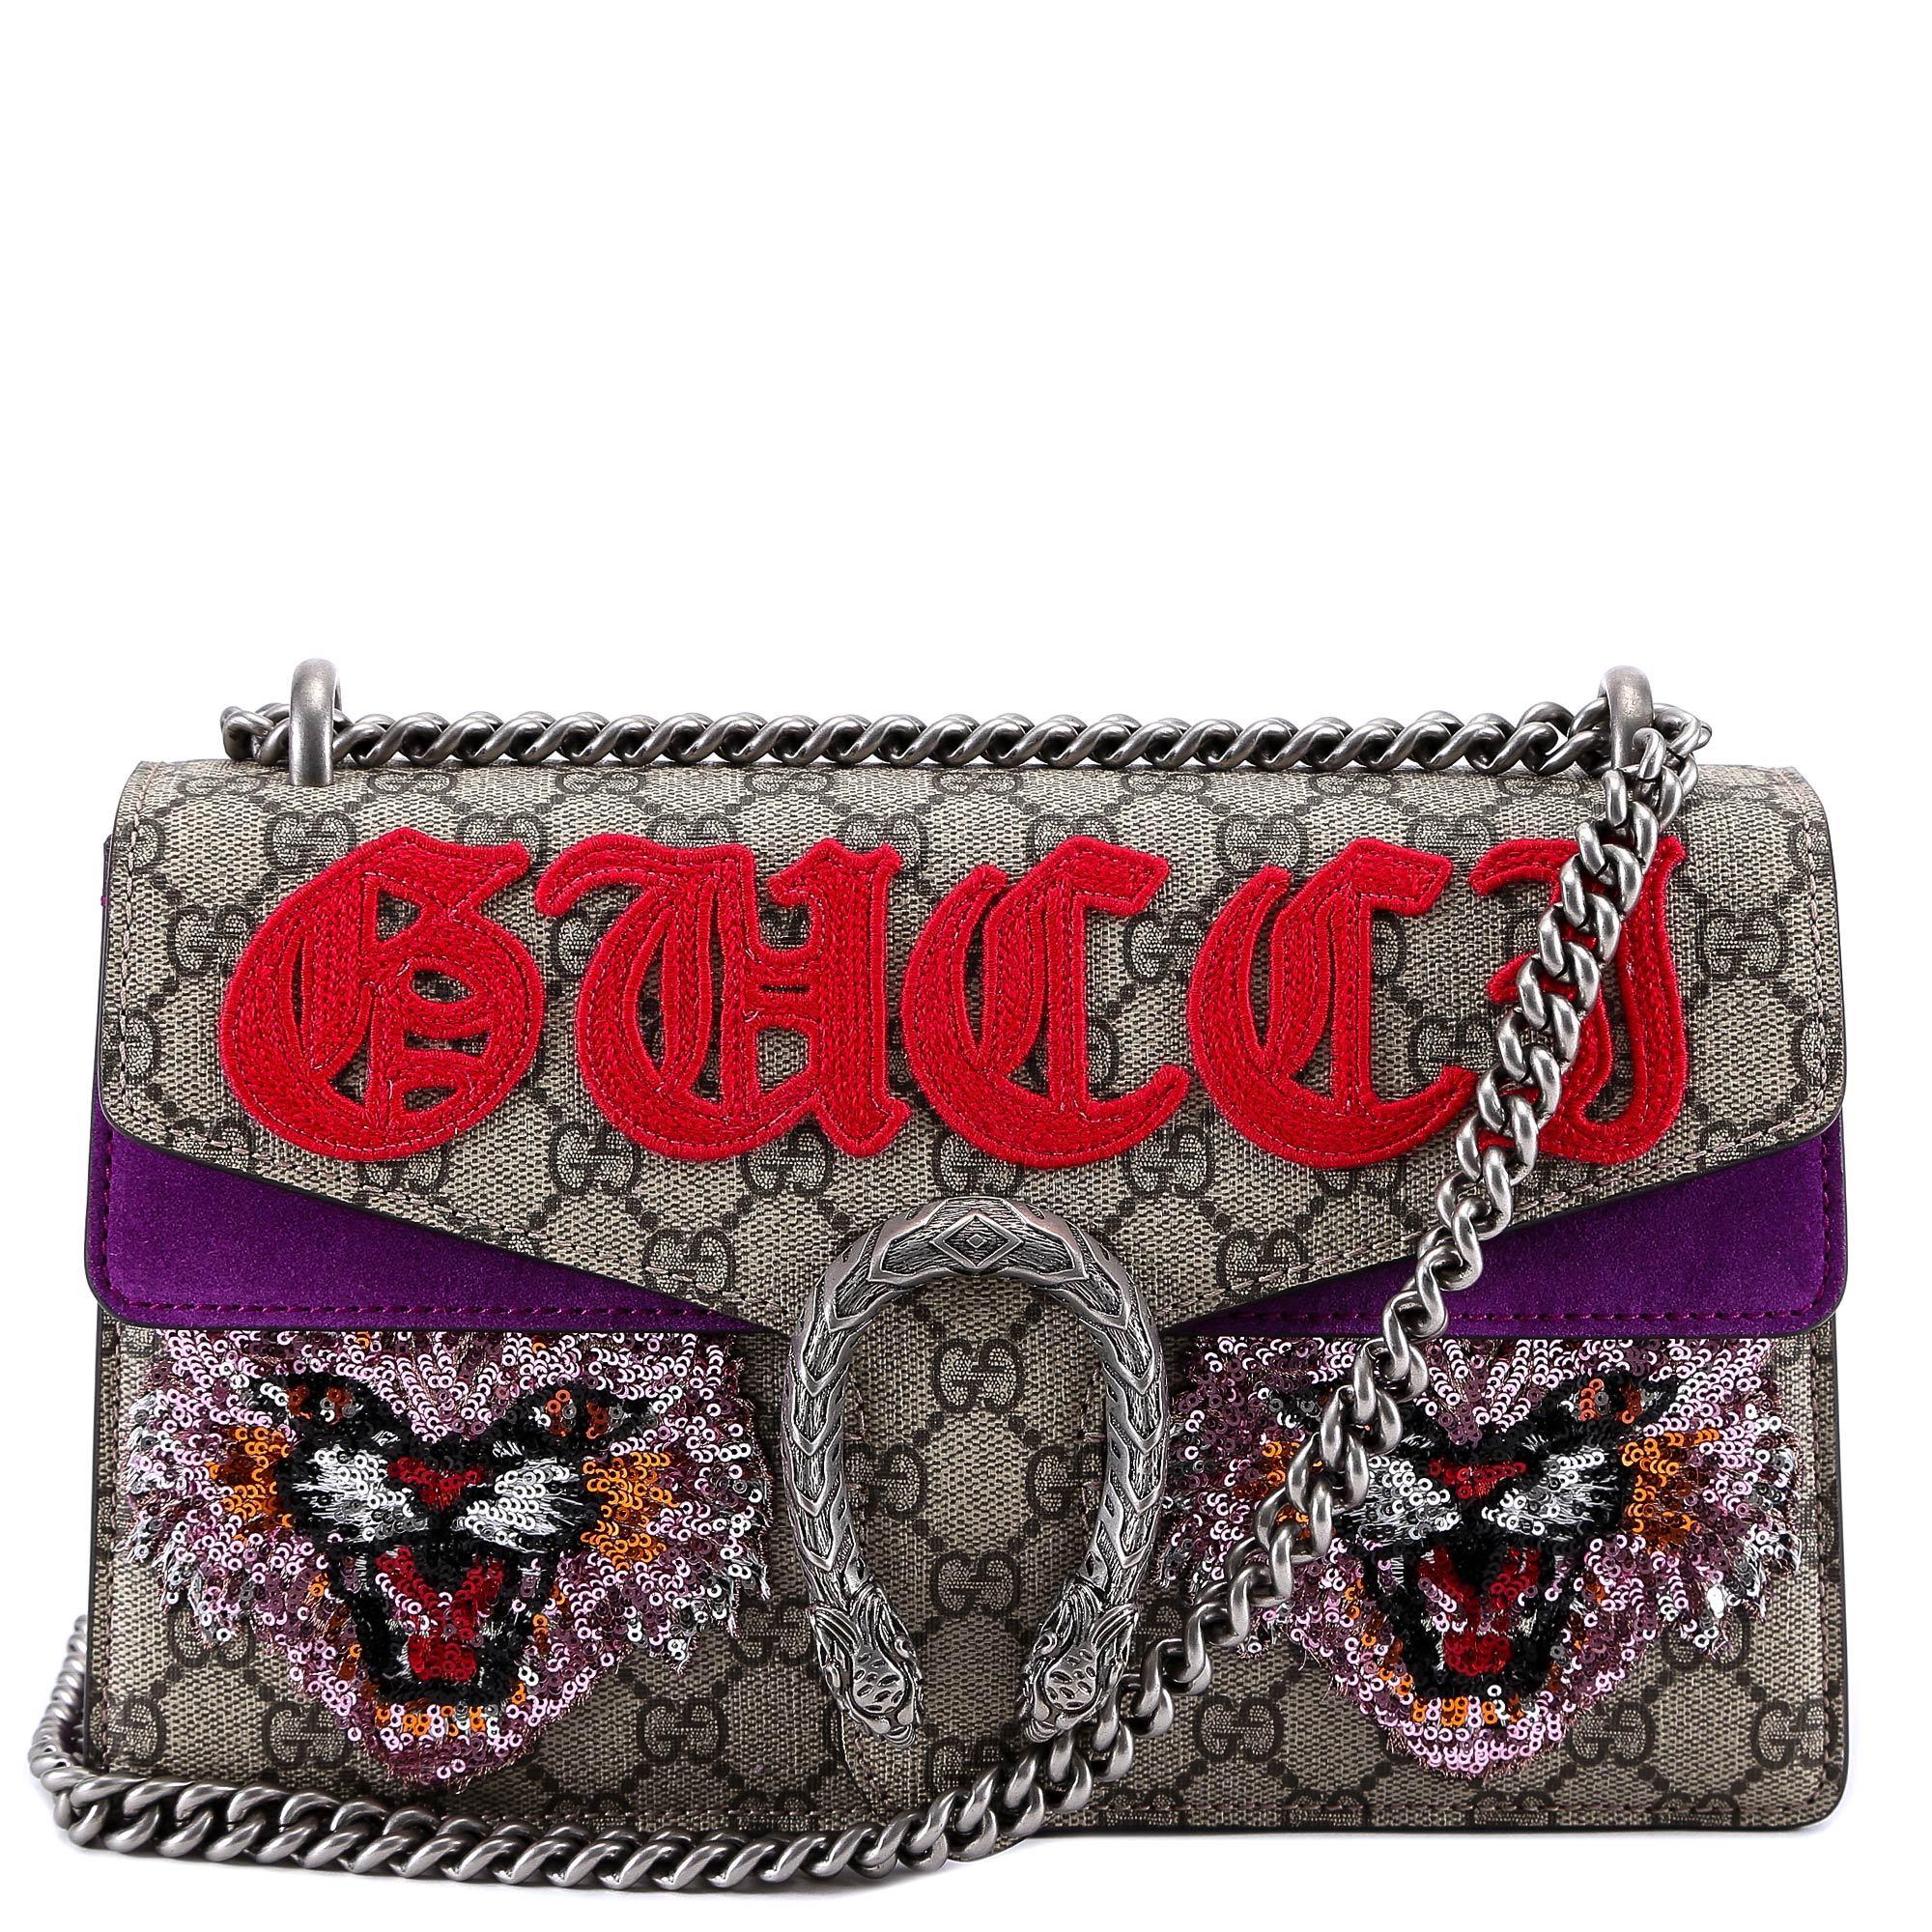 Gucci Dionysus GG Supreme Chain Strap Shoulder Bag in Red | Lyst